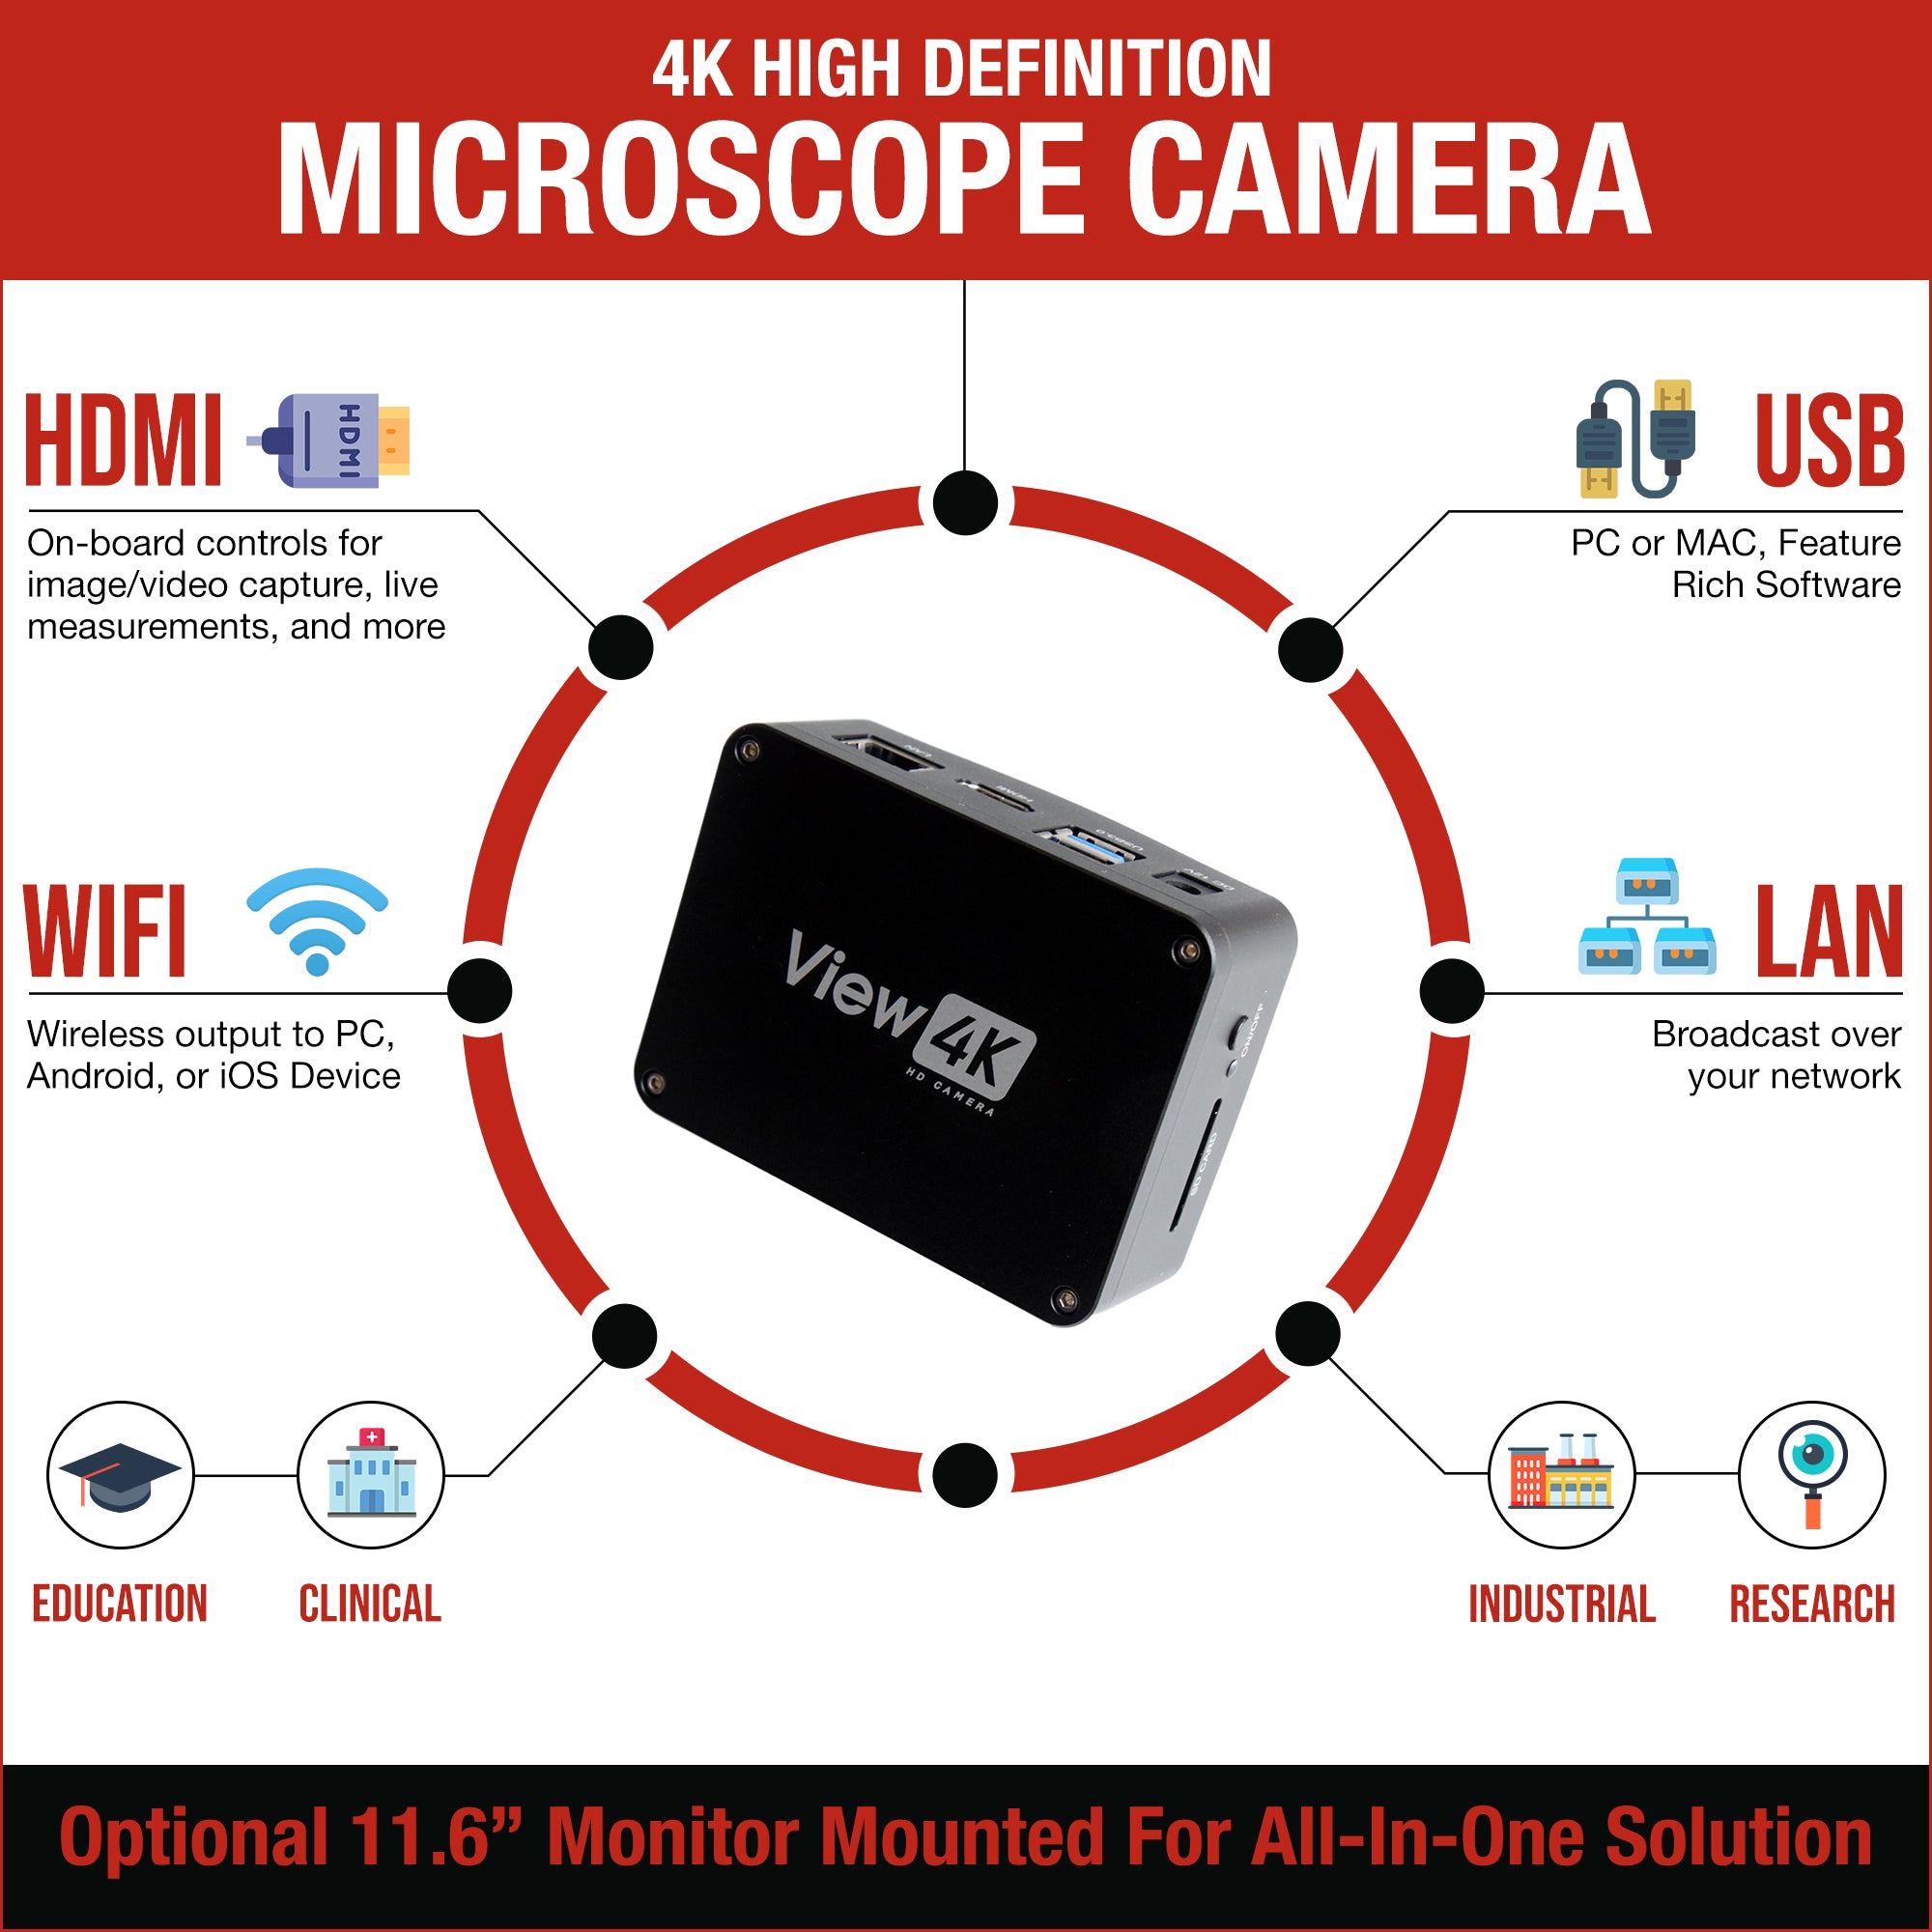 VIEW4K High 4K HDMI, WiFi, USB Microscope Camera – Microscope Central